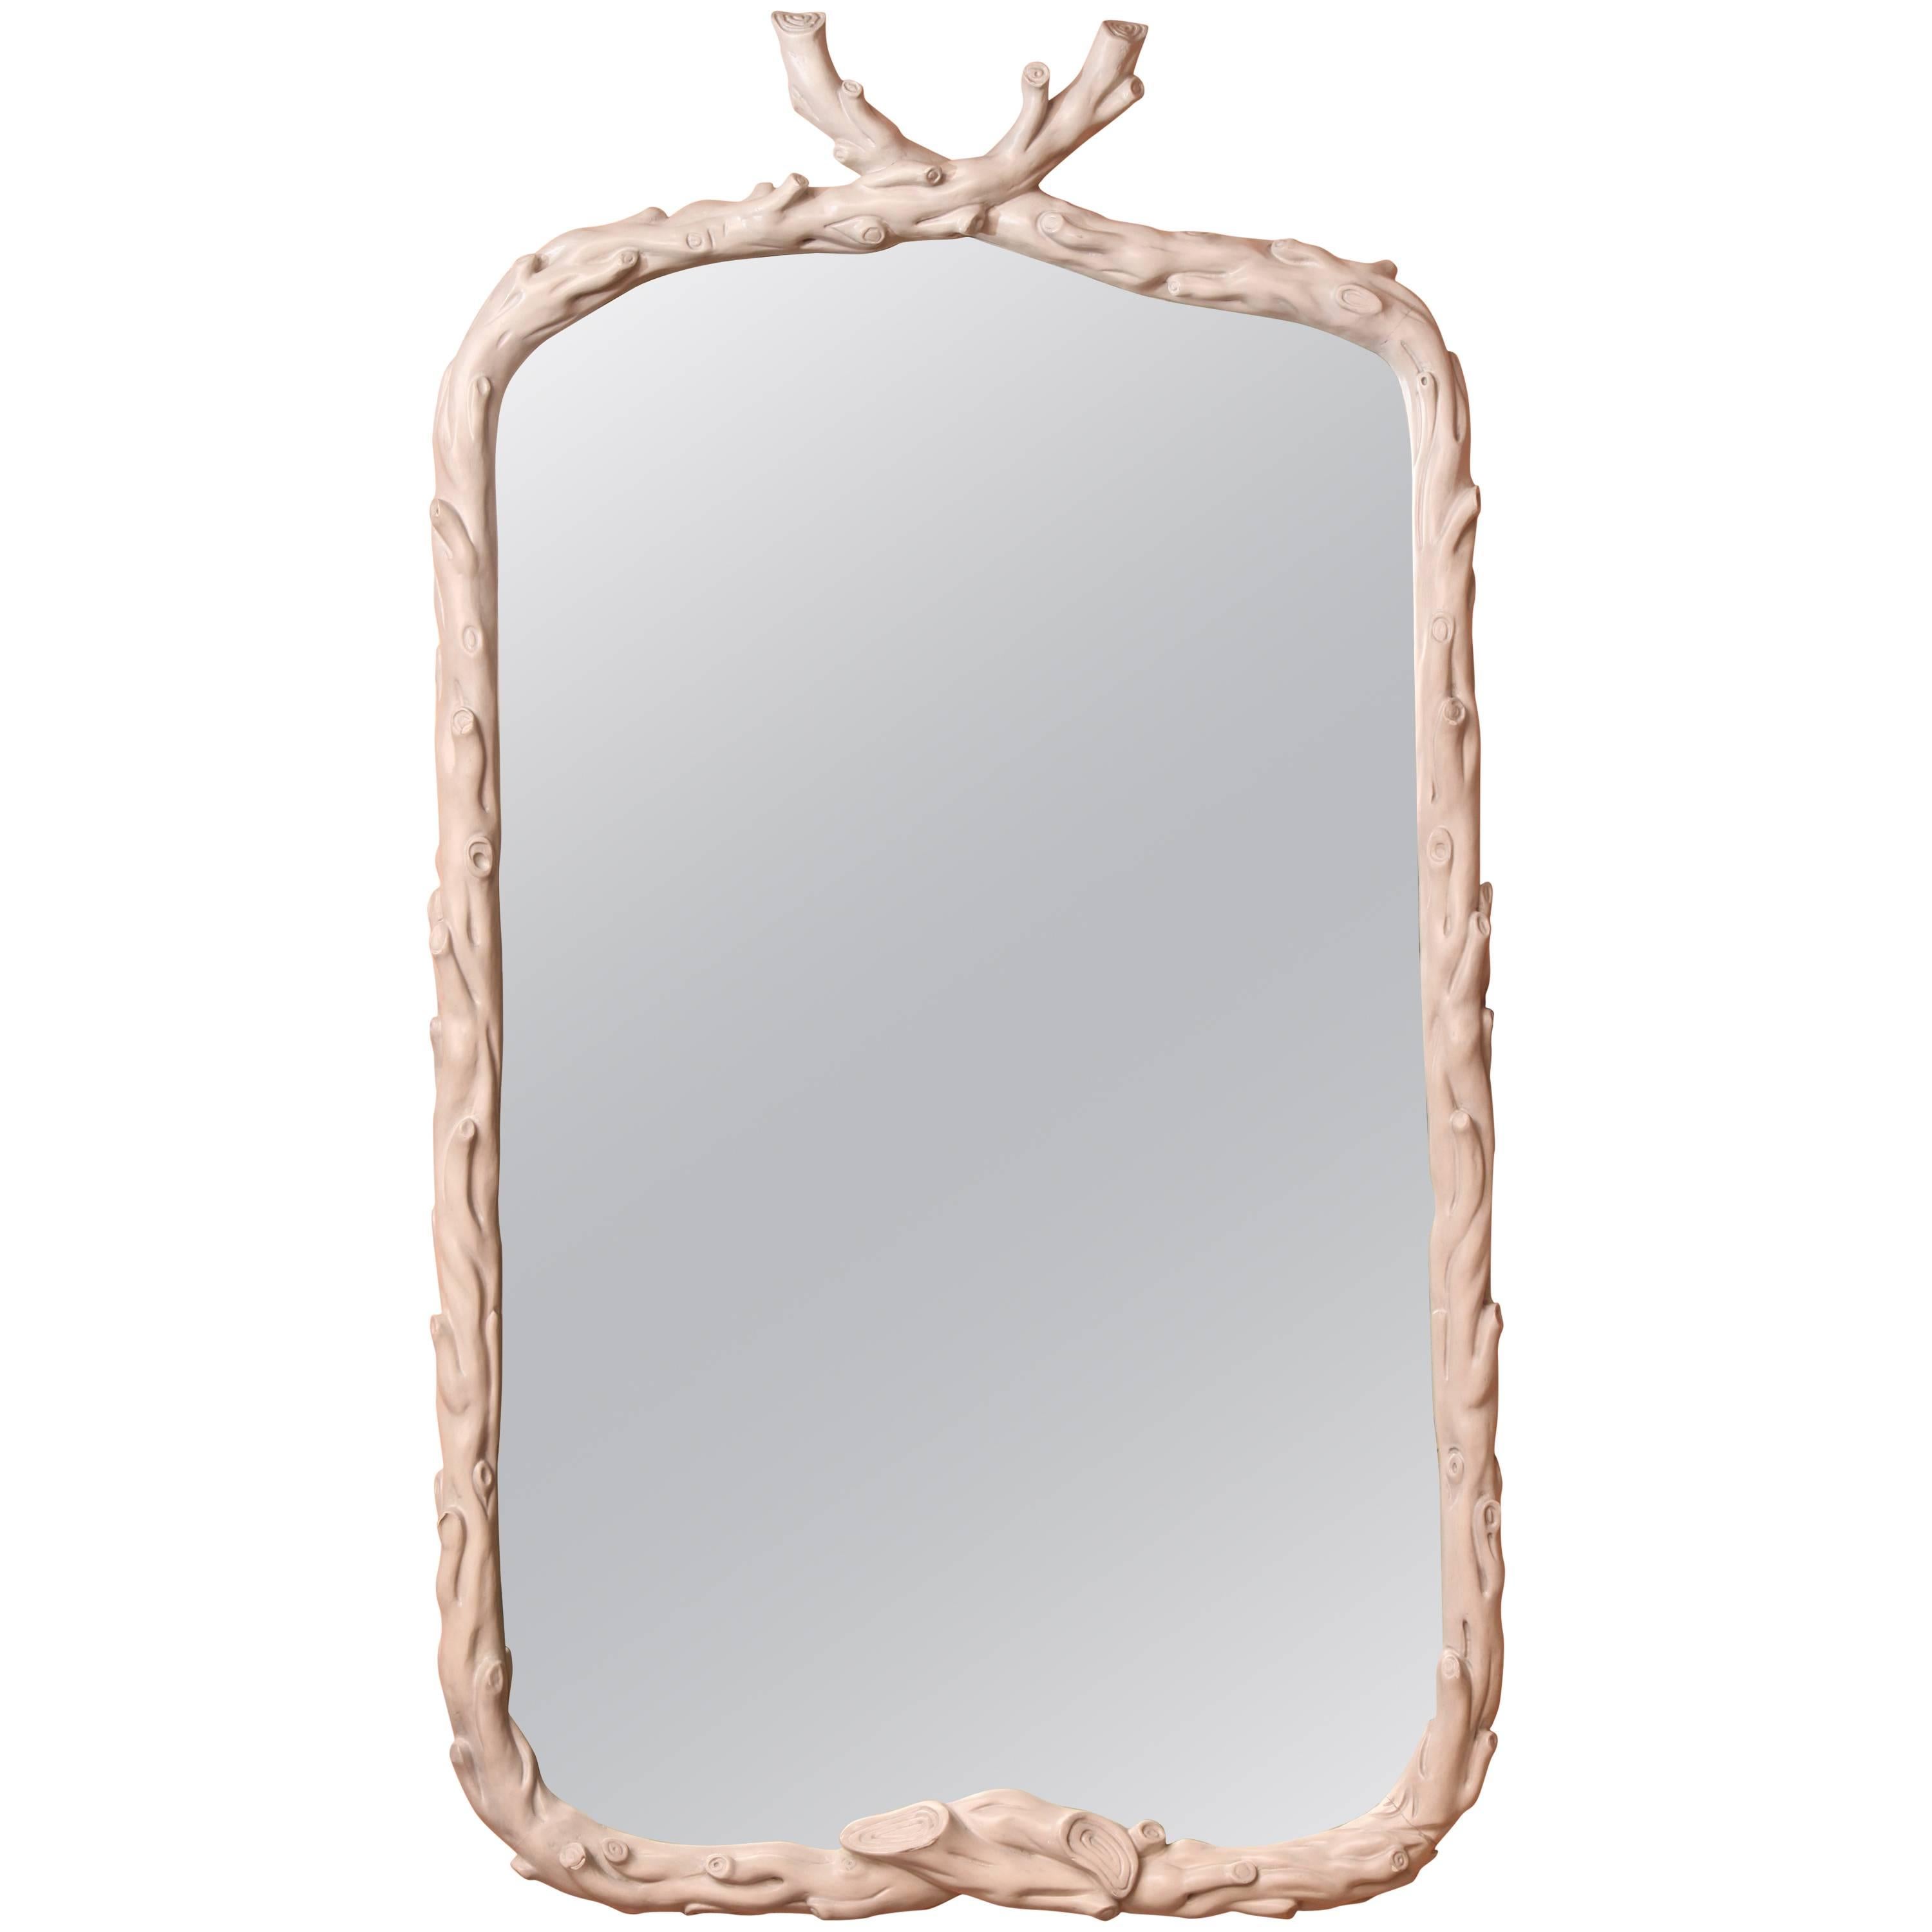 Todd Alexander Romano "Twig" Mirror in Antique White Finish For Sale